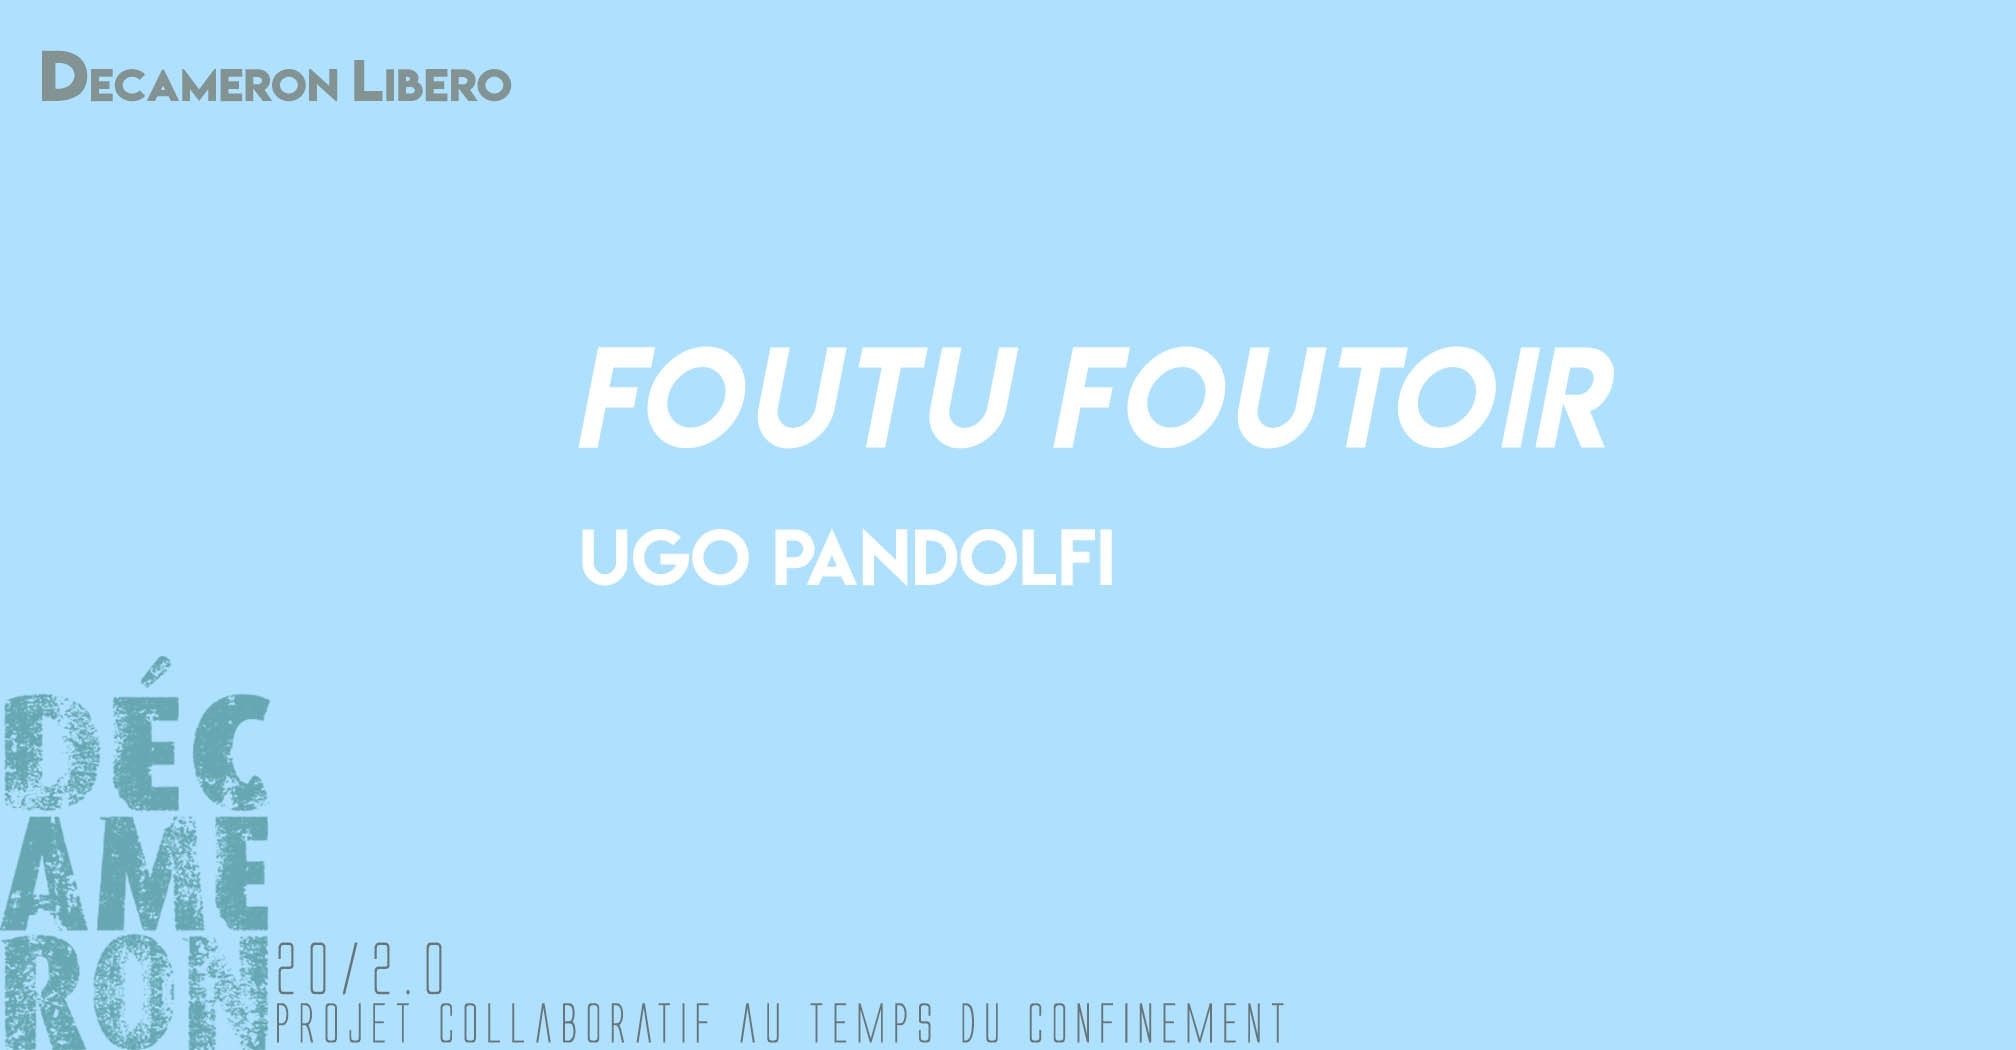 Foutu foutoir - Ugo Pandolfi